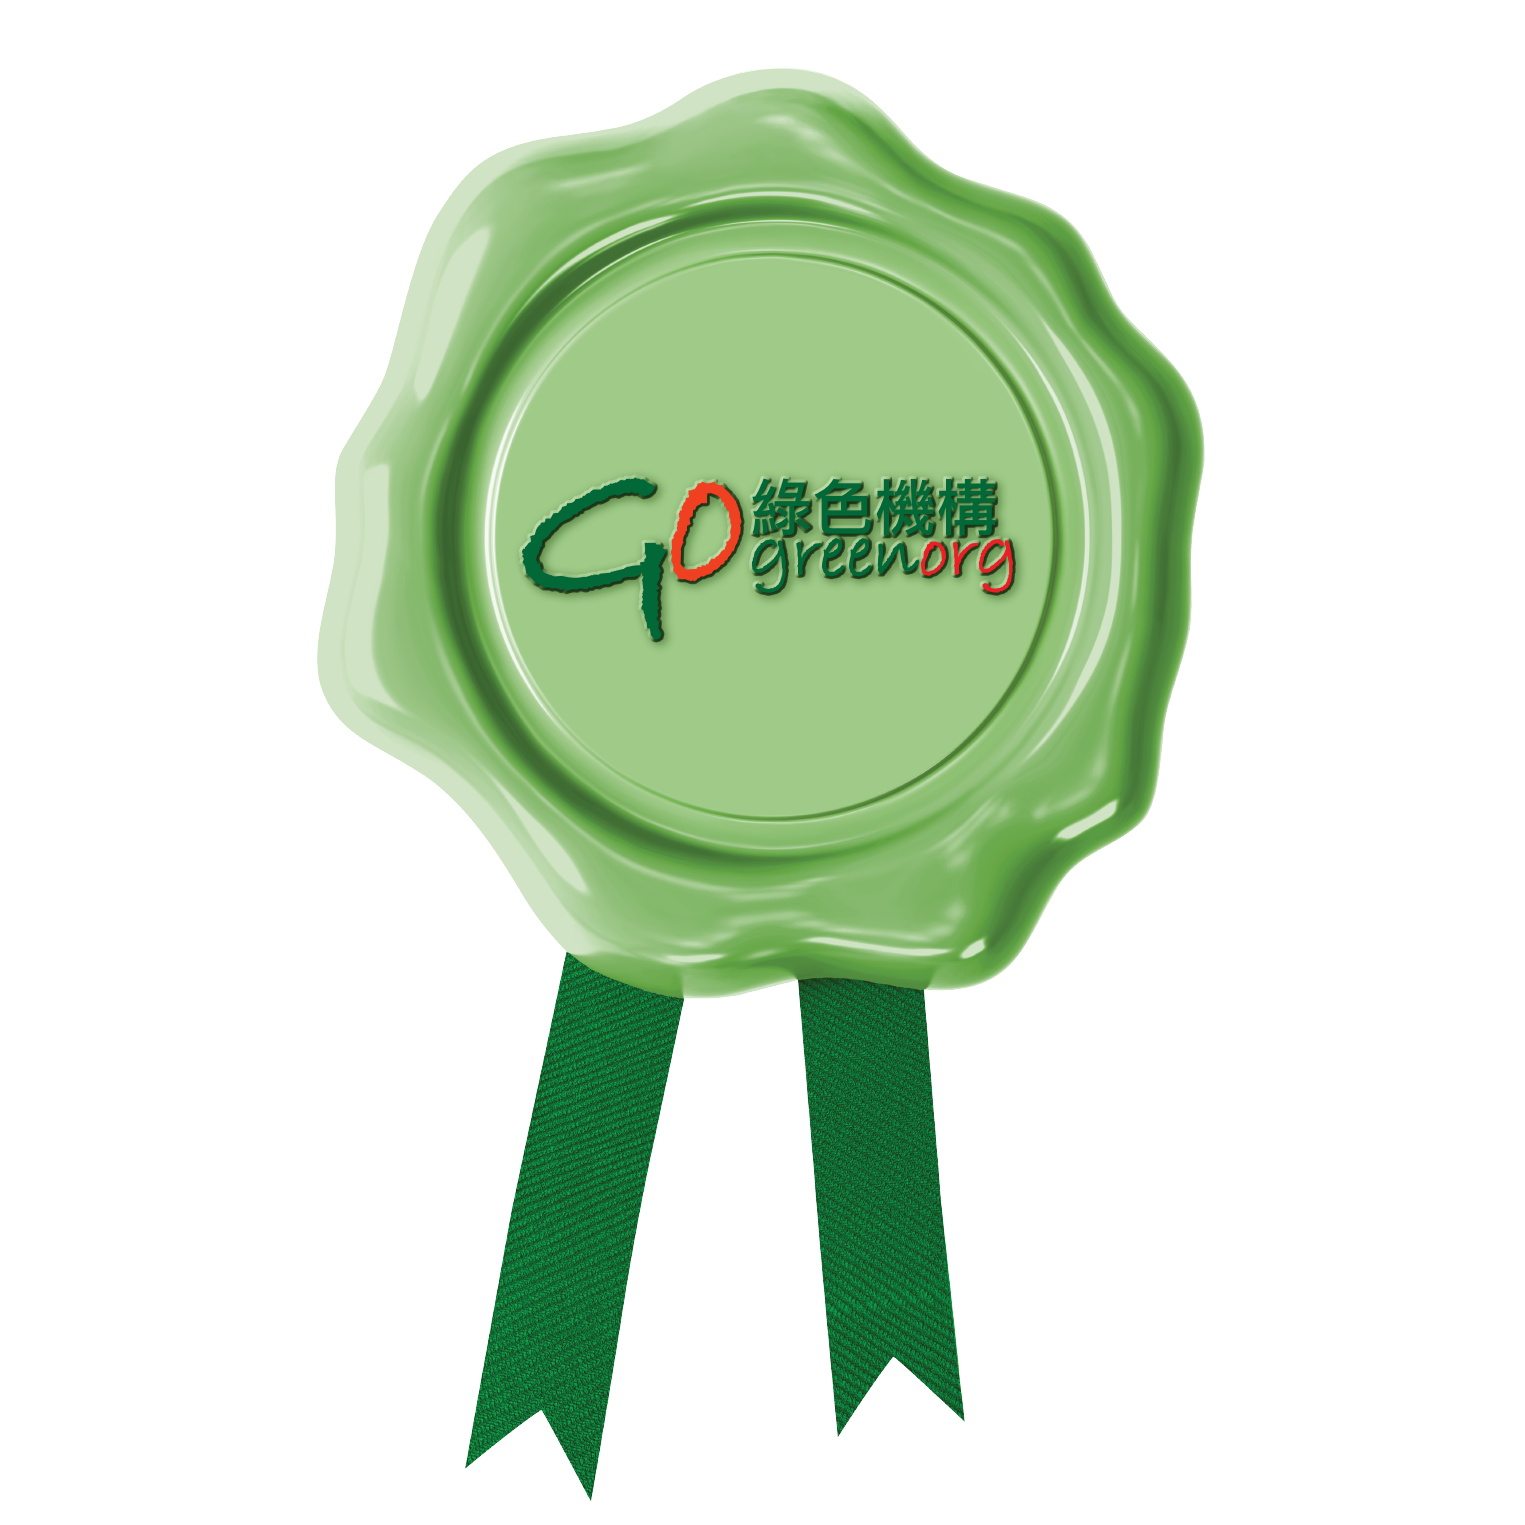 Hong Kong Green Organisation (2019-2021)